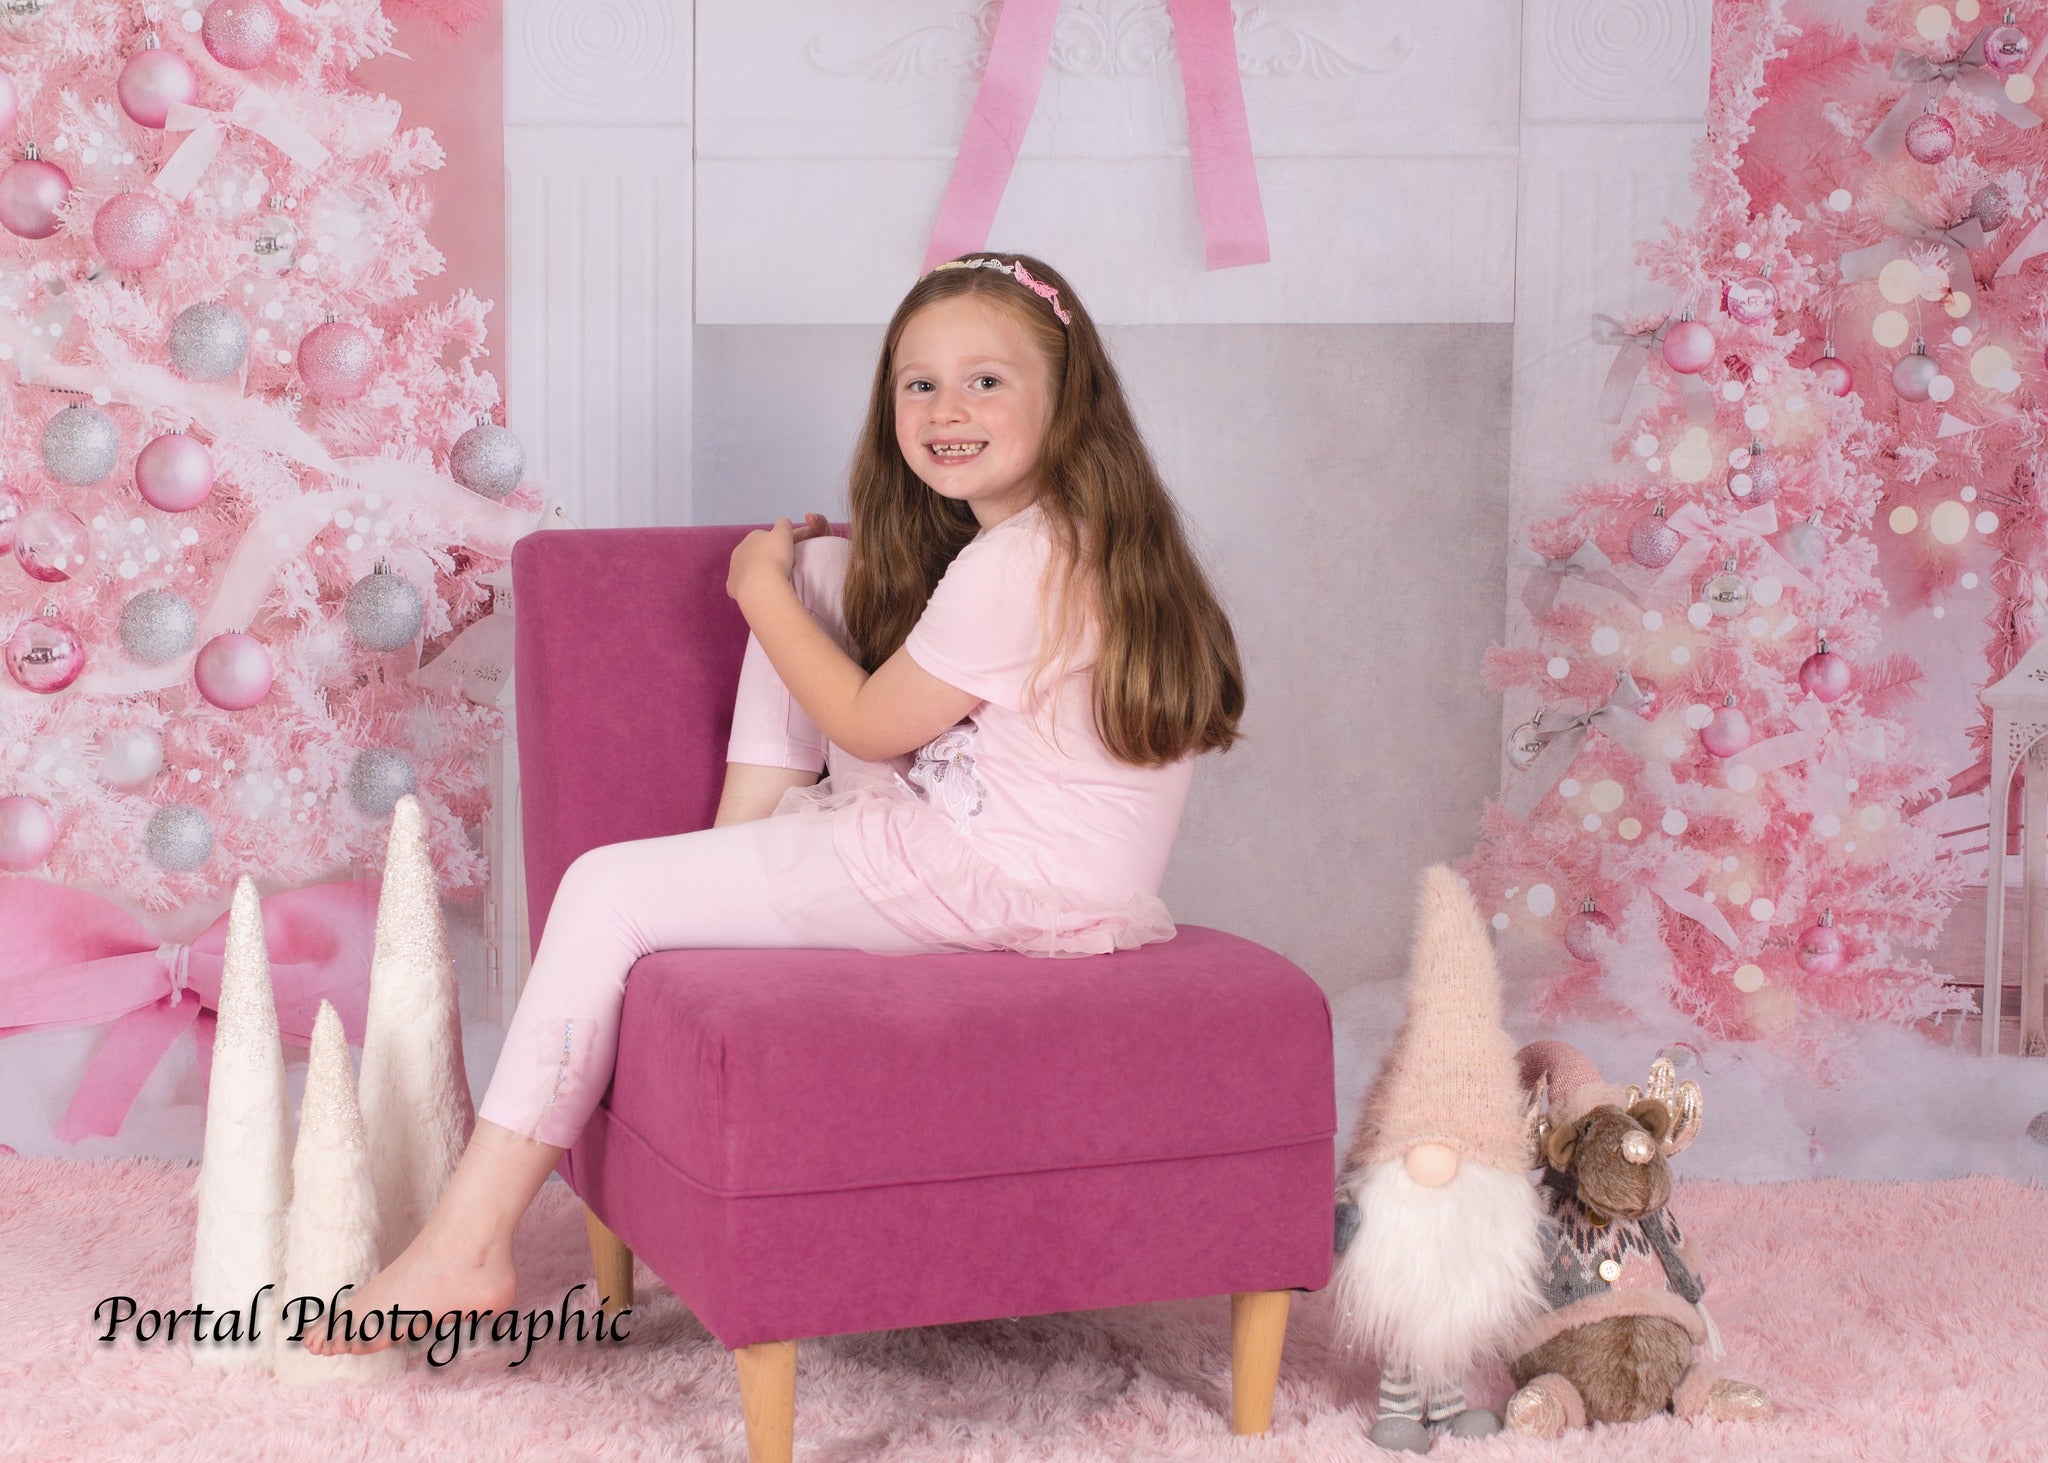 Kate Christmas Backdrop Fireplace Pink Tree Princess Designed by Emetselch